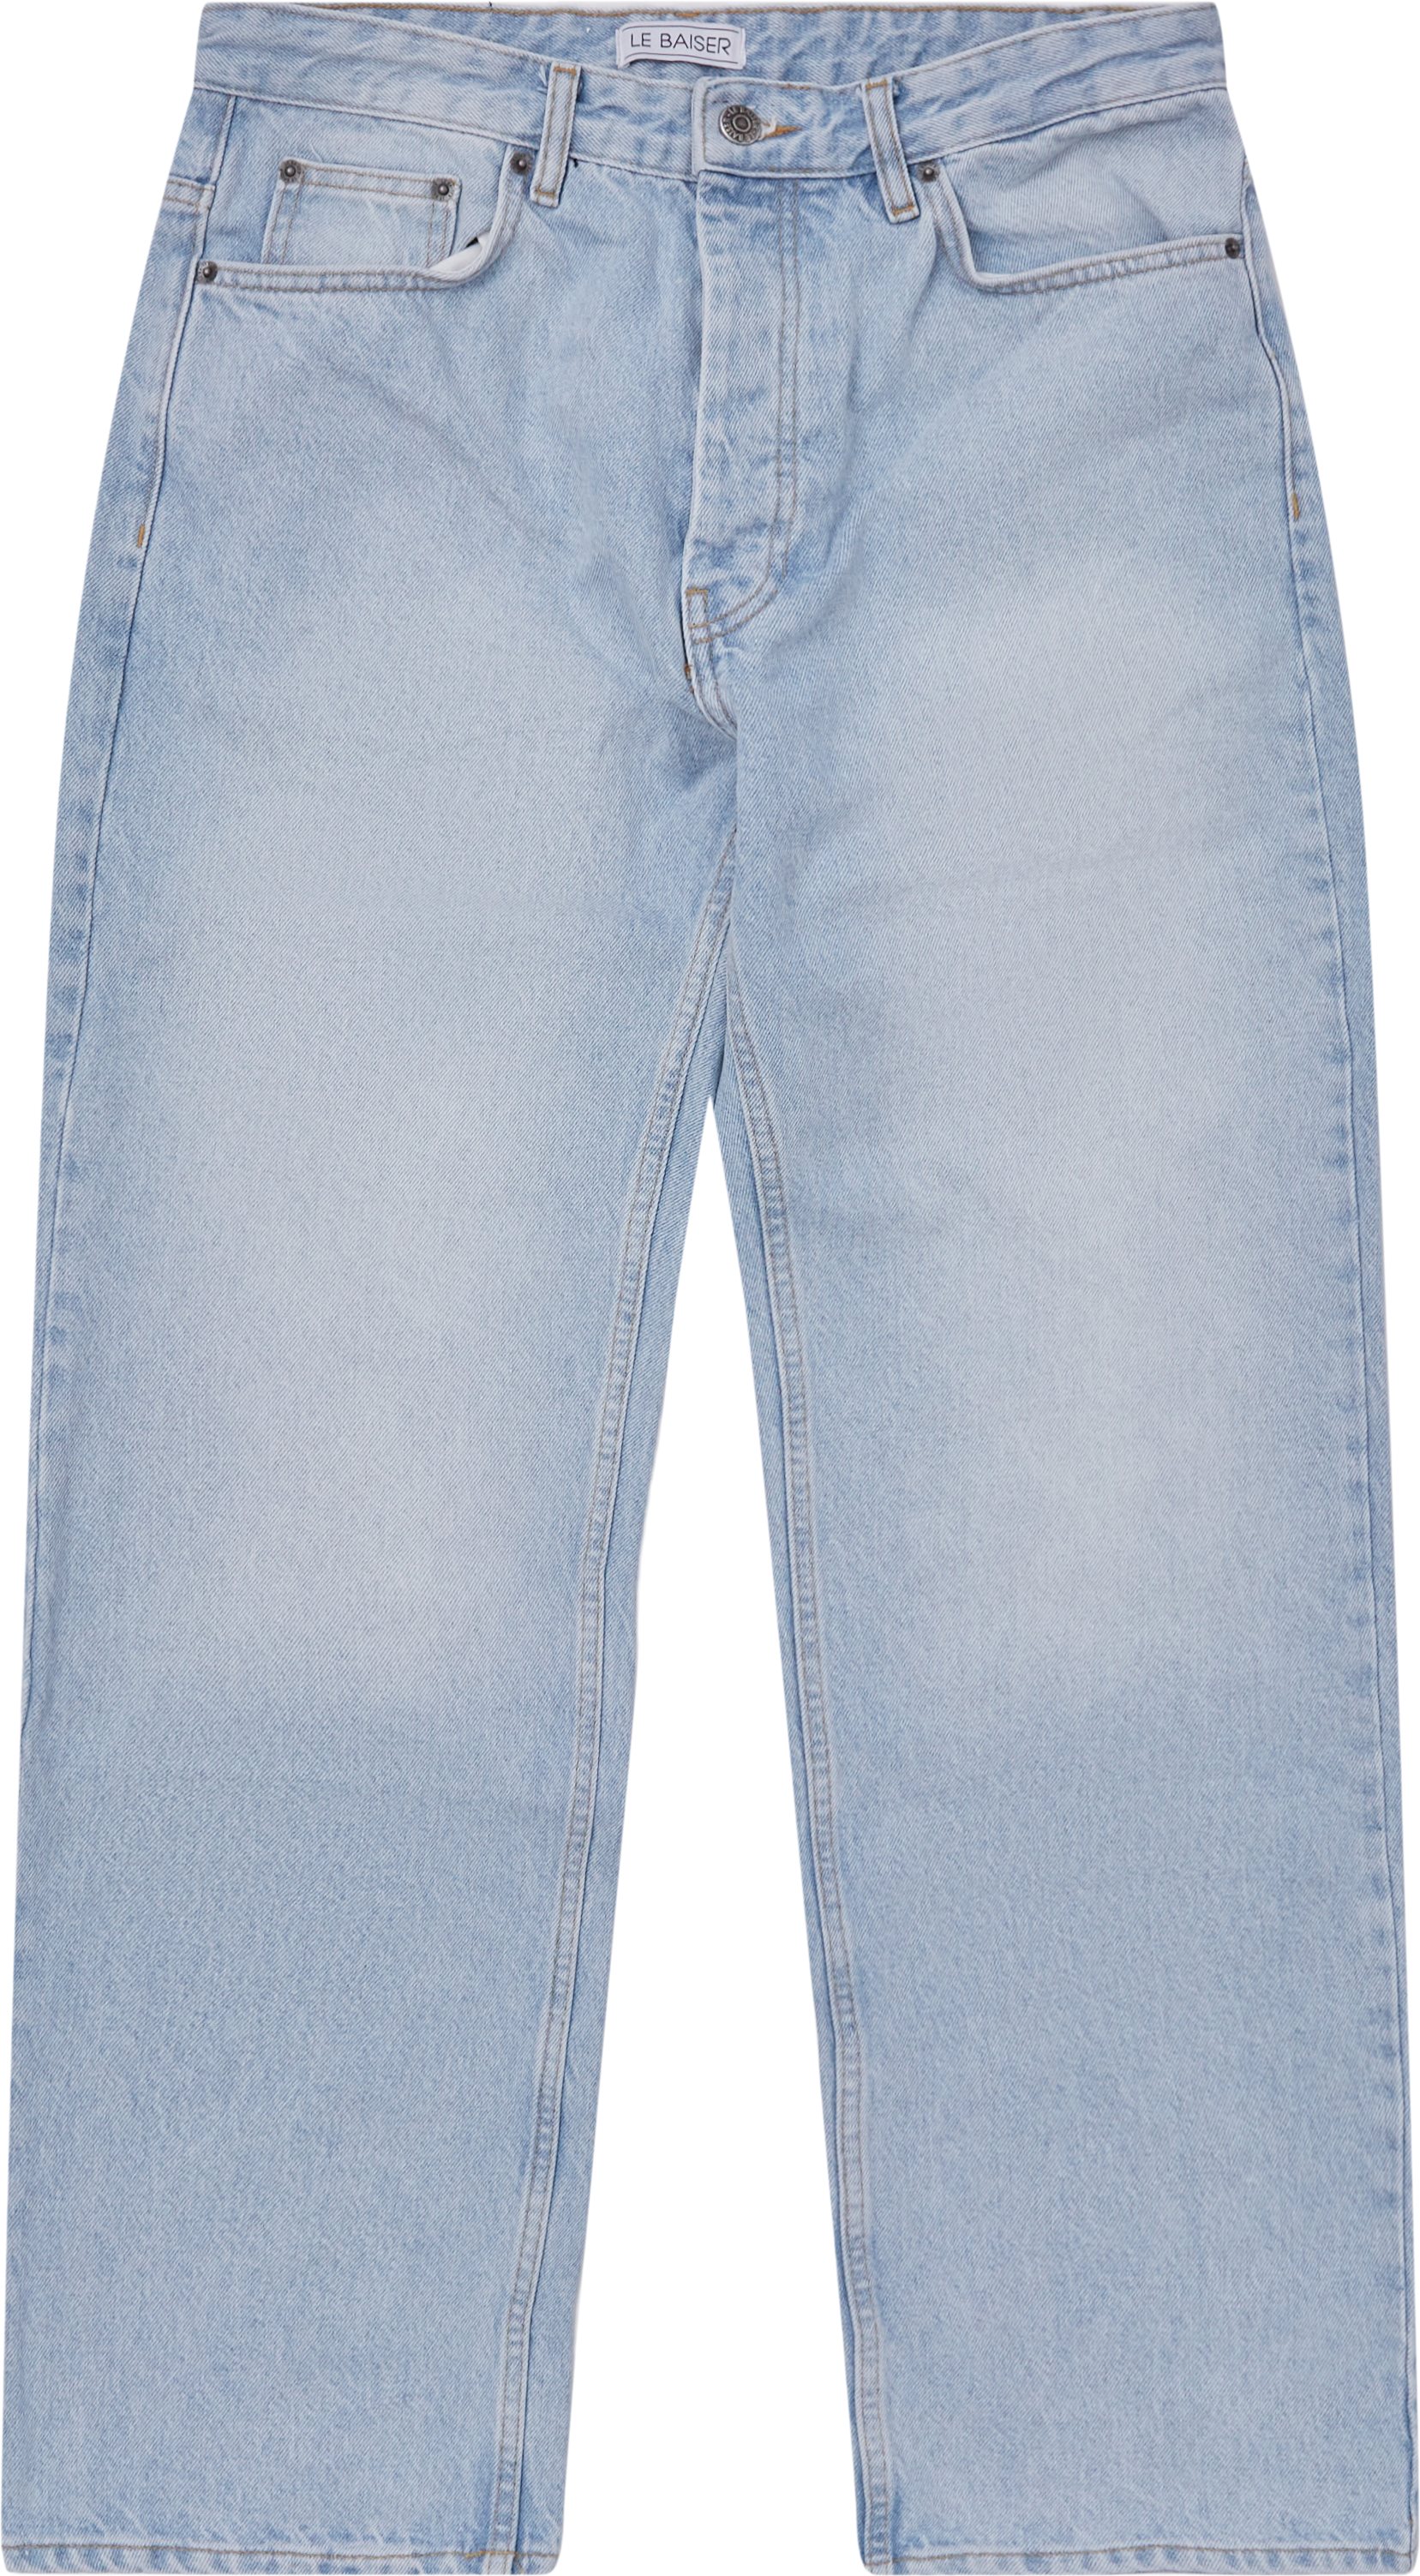 Jeans - Loose fit - Denim